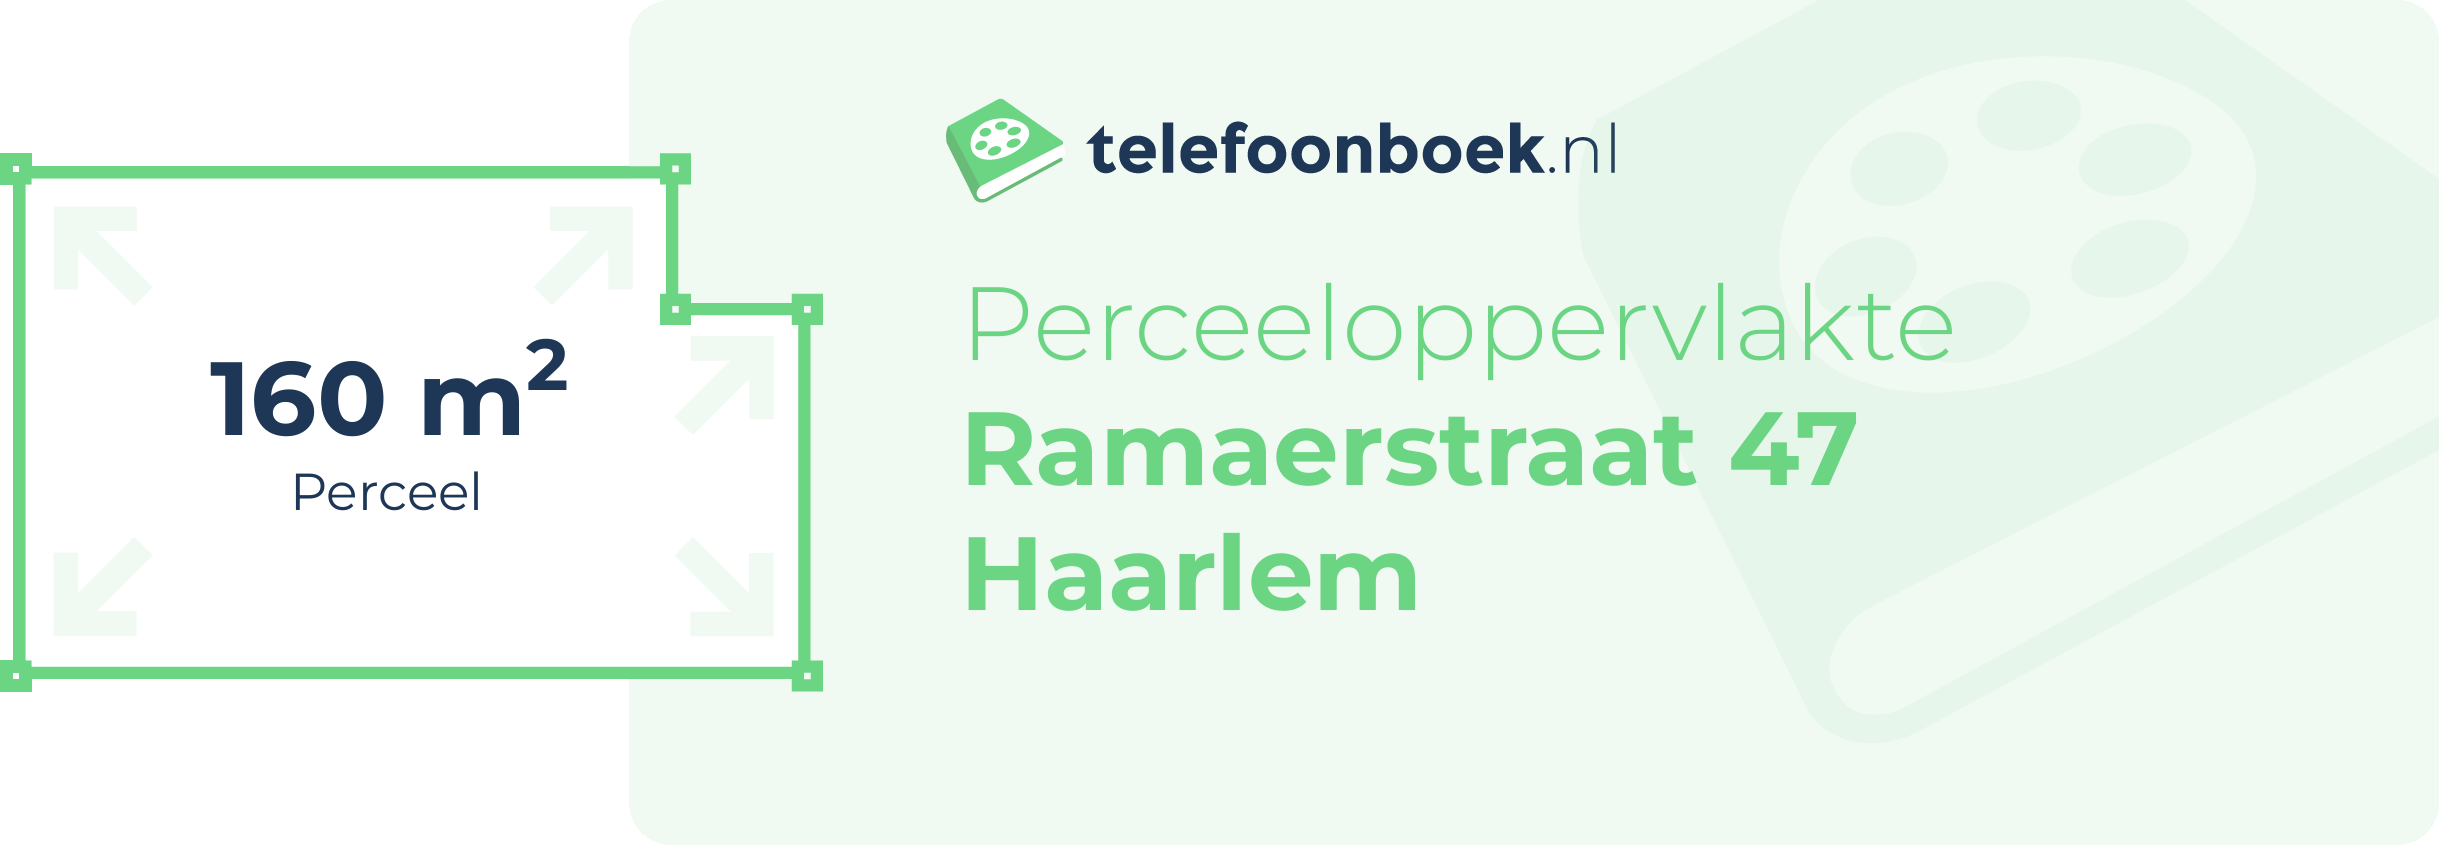 Perceeloppervlakte Ramaerstraat 47 Haarlem